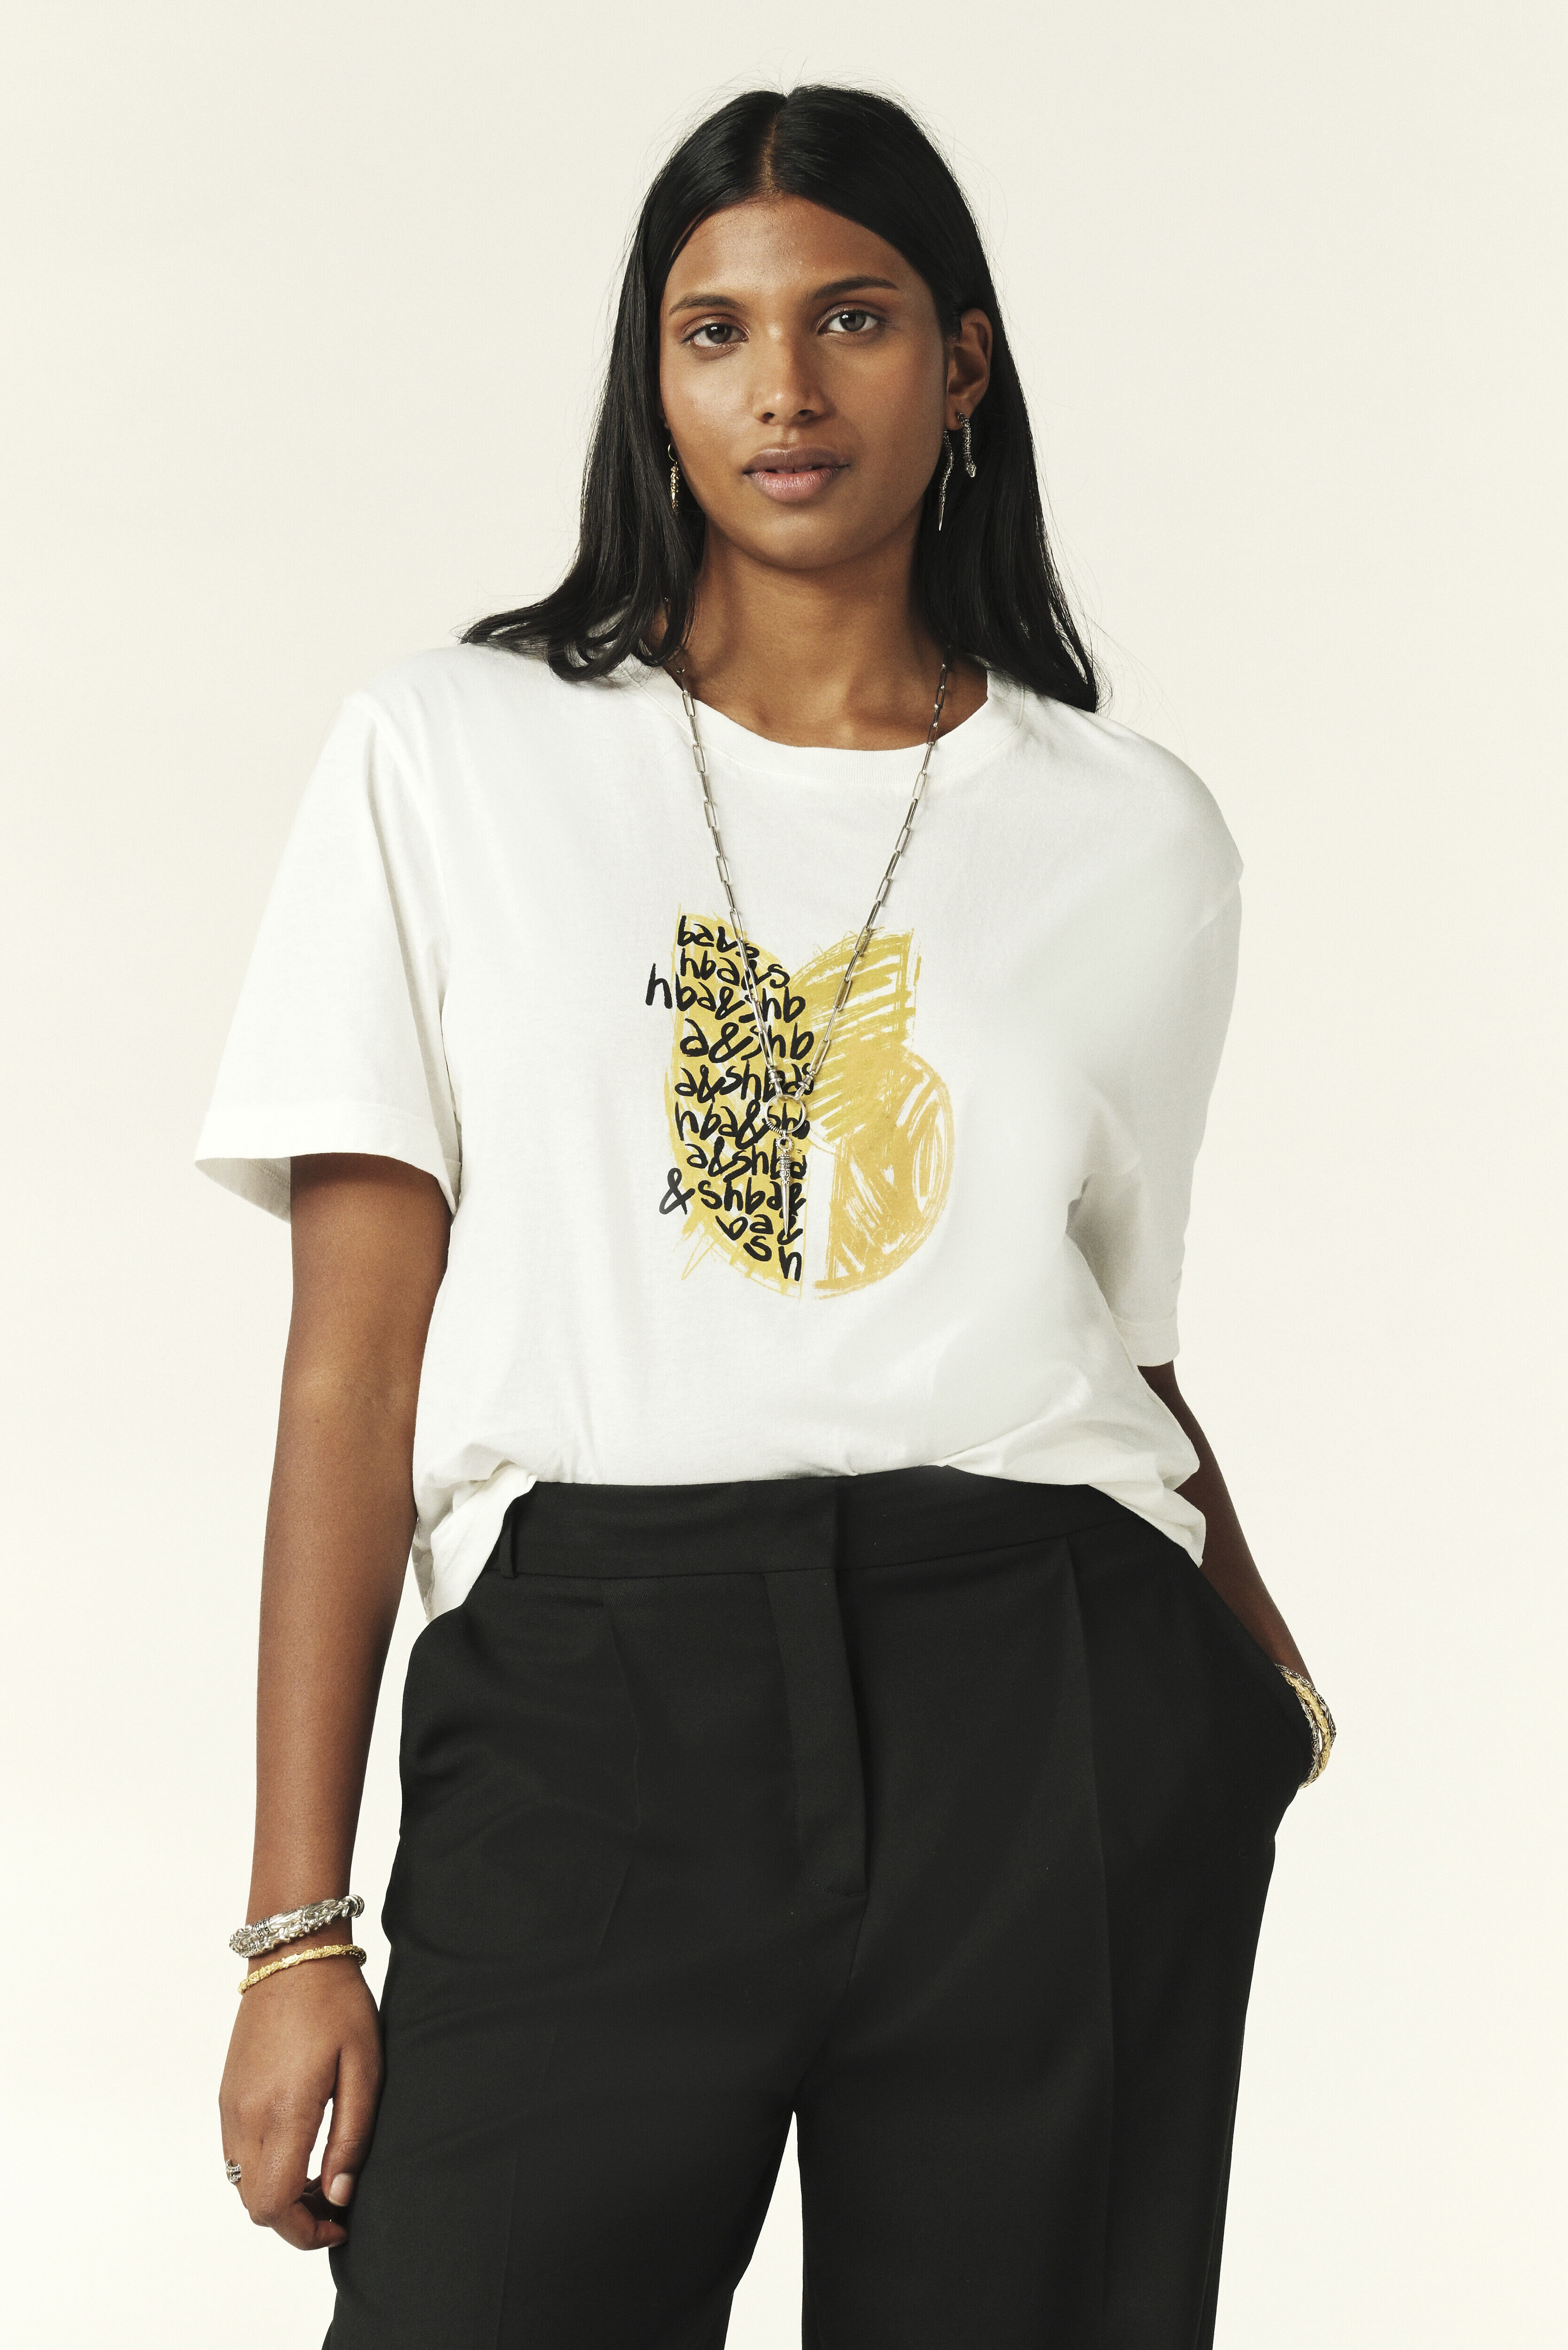 White T-Shirts & Tank Tops For Women - Graphic Tees & V-Necks 